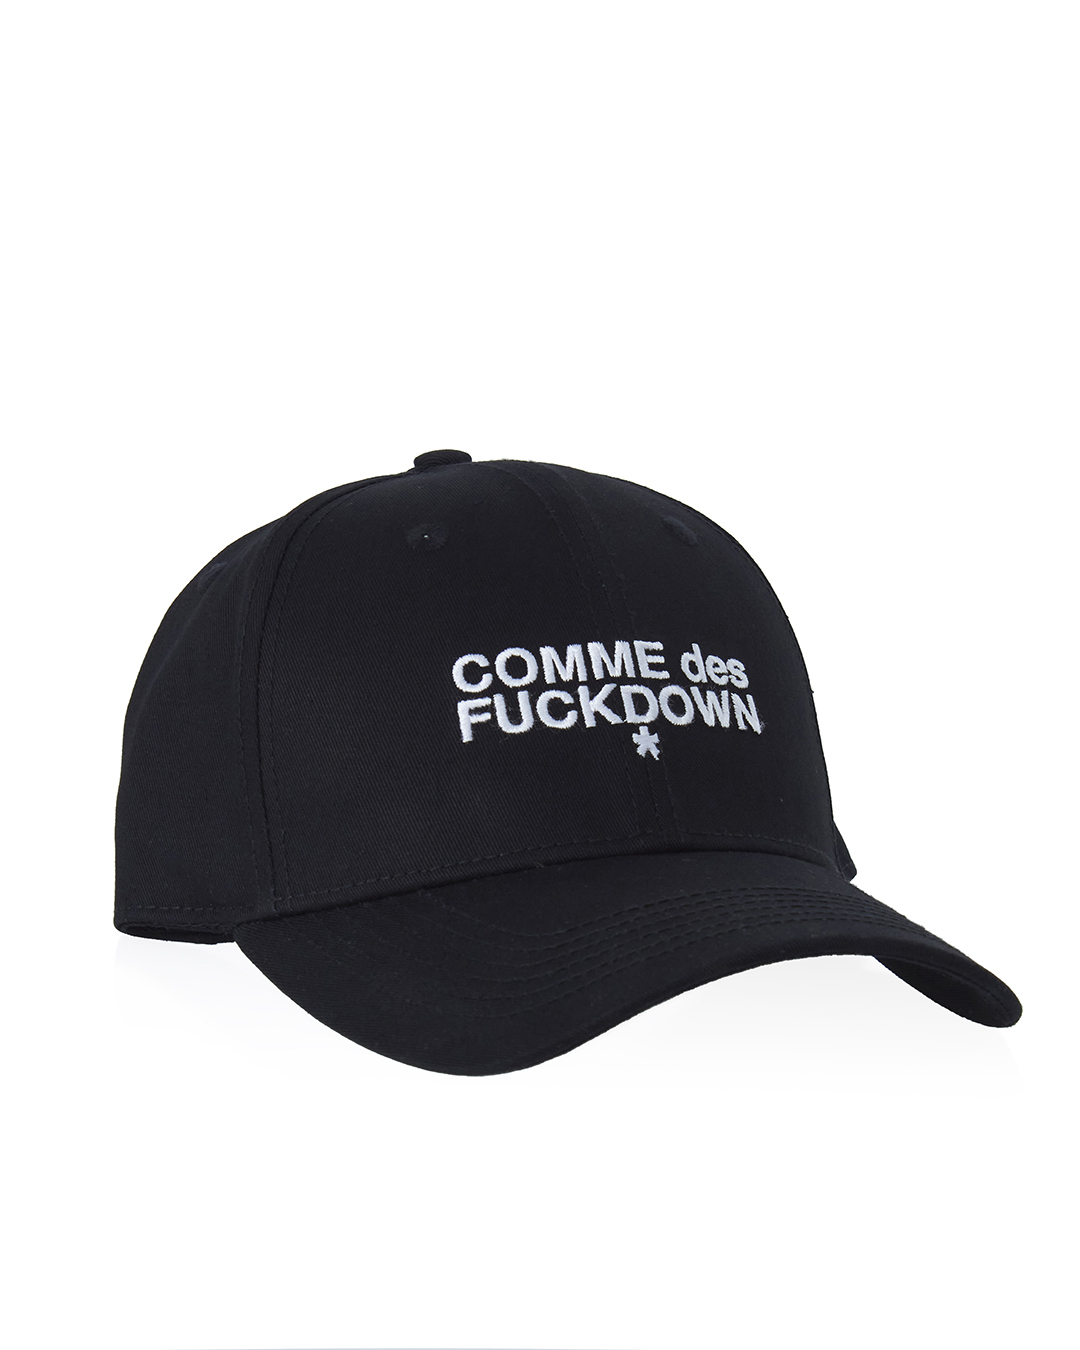 COMME des FUCKDOWN с вышивкой логотипа бренда  артикул  марки COMME des FUCKDOWN купить за 7400 руб.